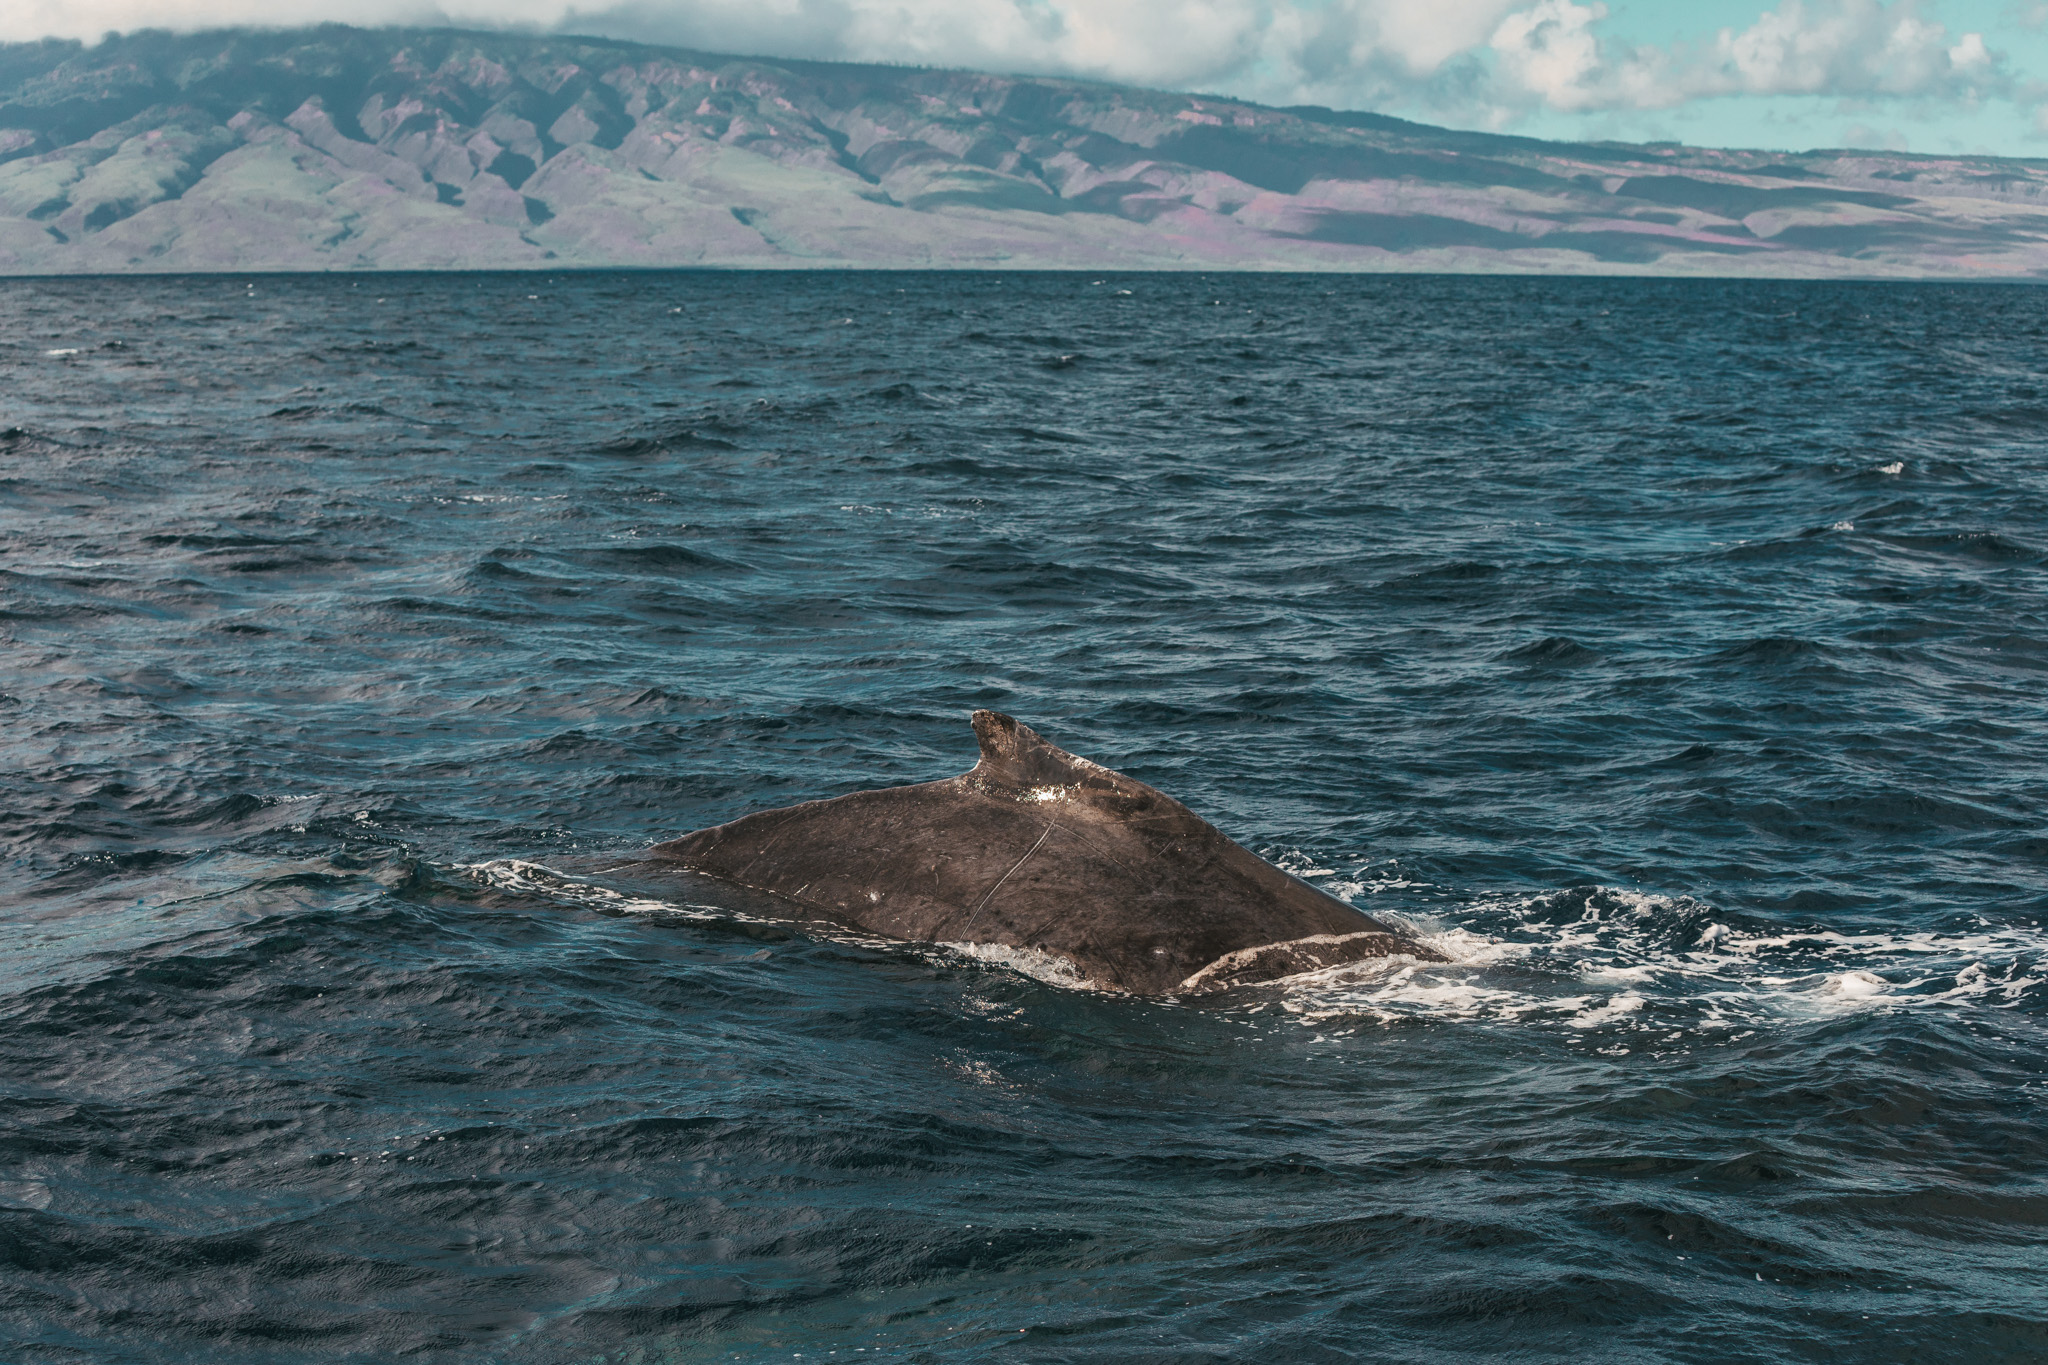 Maui whale watching on a catamaran // The Quick Guide to Visiting Maui, Hawaii #readysetjetset #hawaii #maui